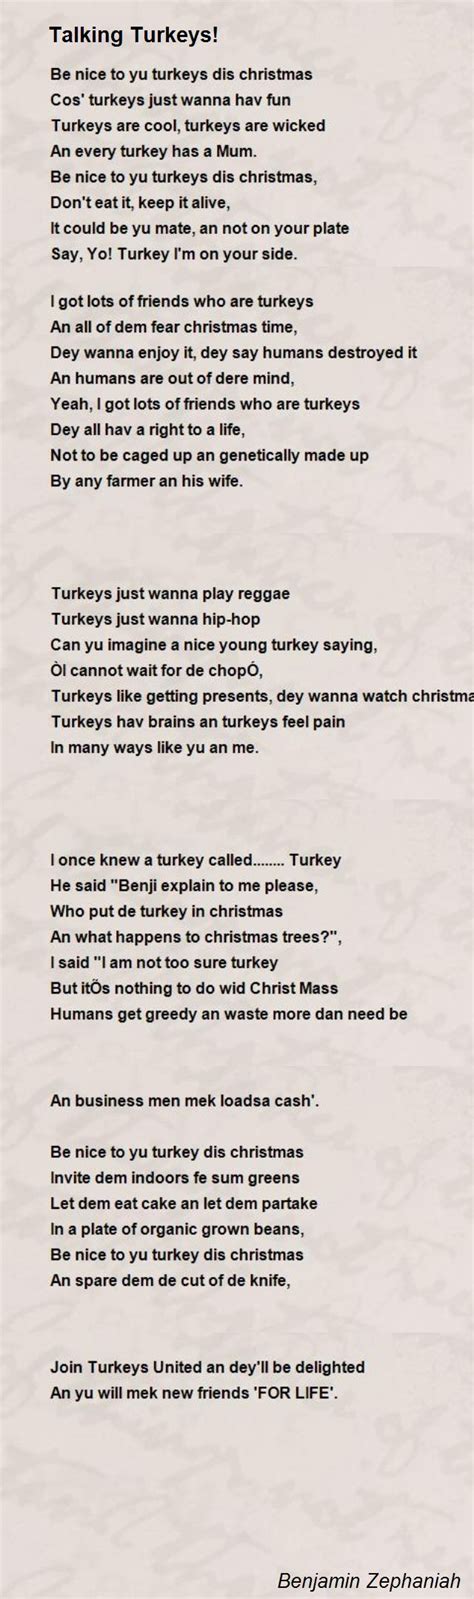 benjamin zephaniah poems turkey